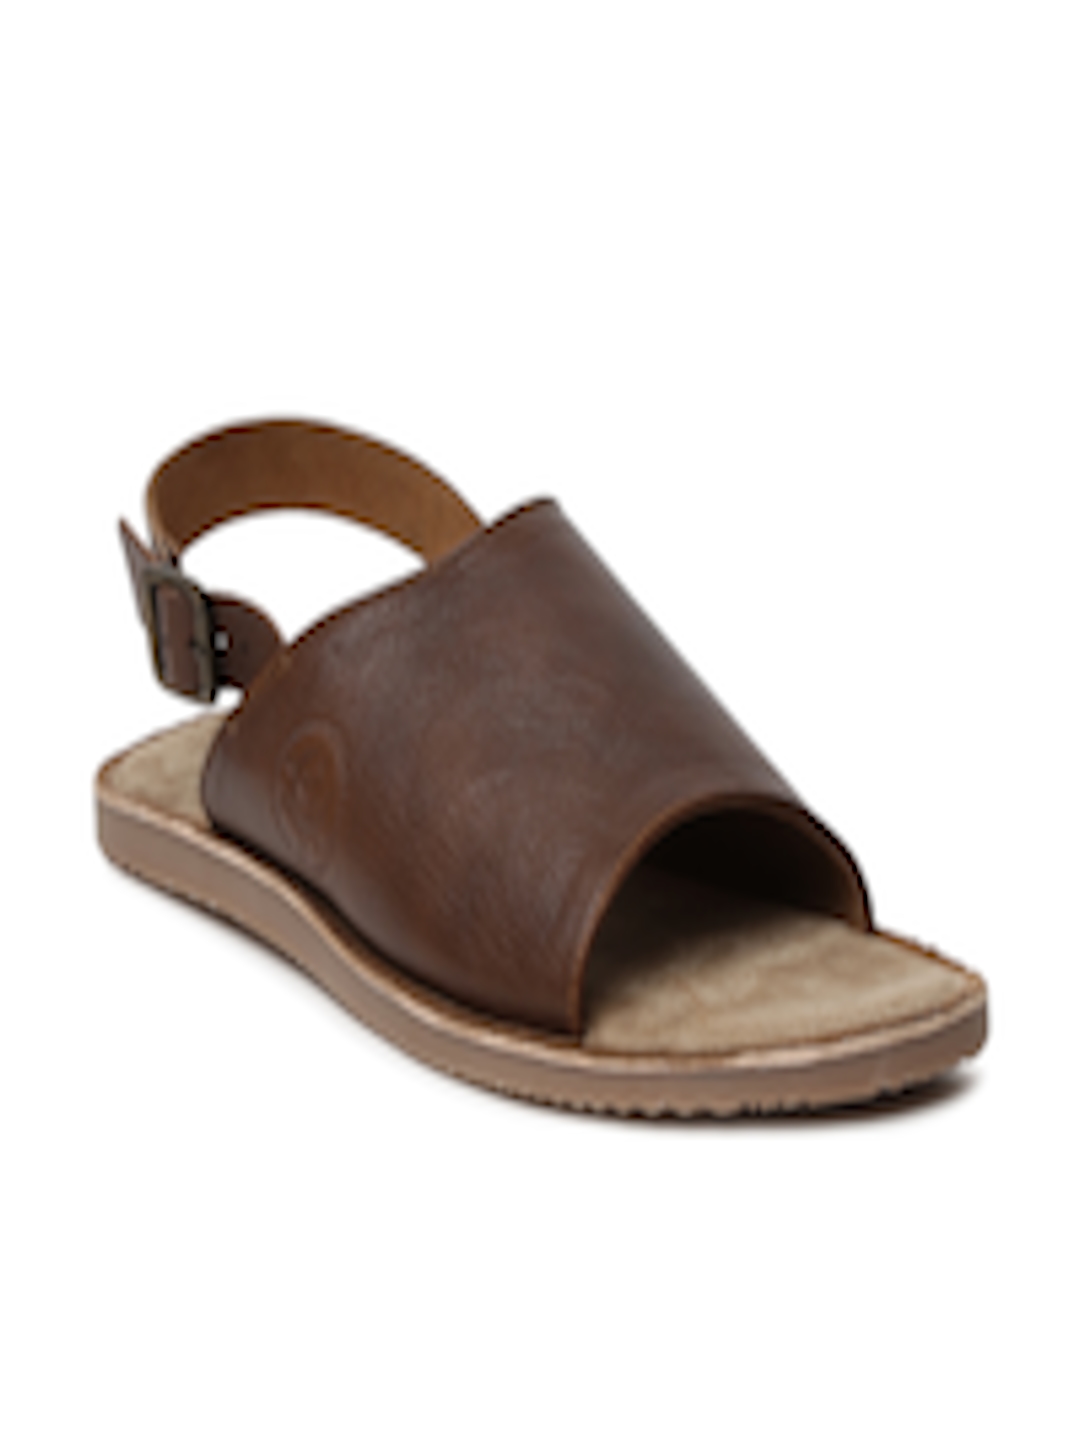 Buy U S Polo  Assn Men  Brown  Cambridge Leather Sandals  